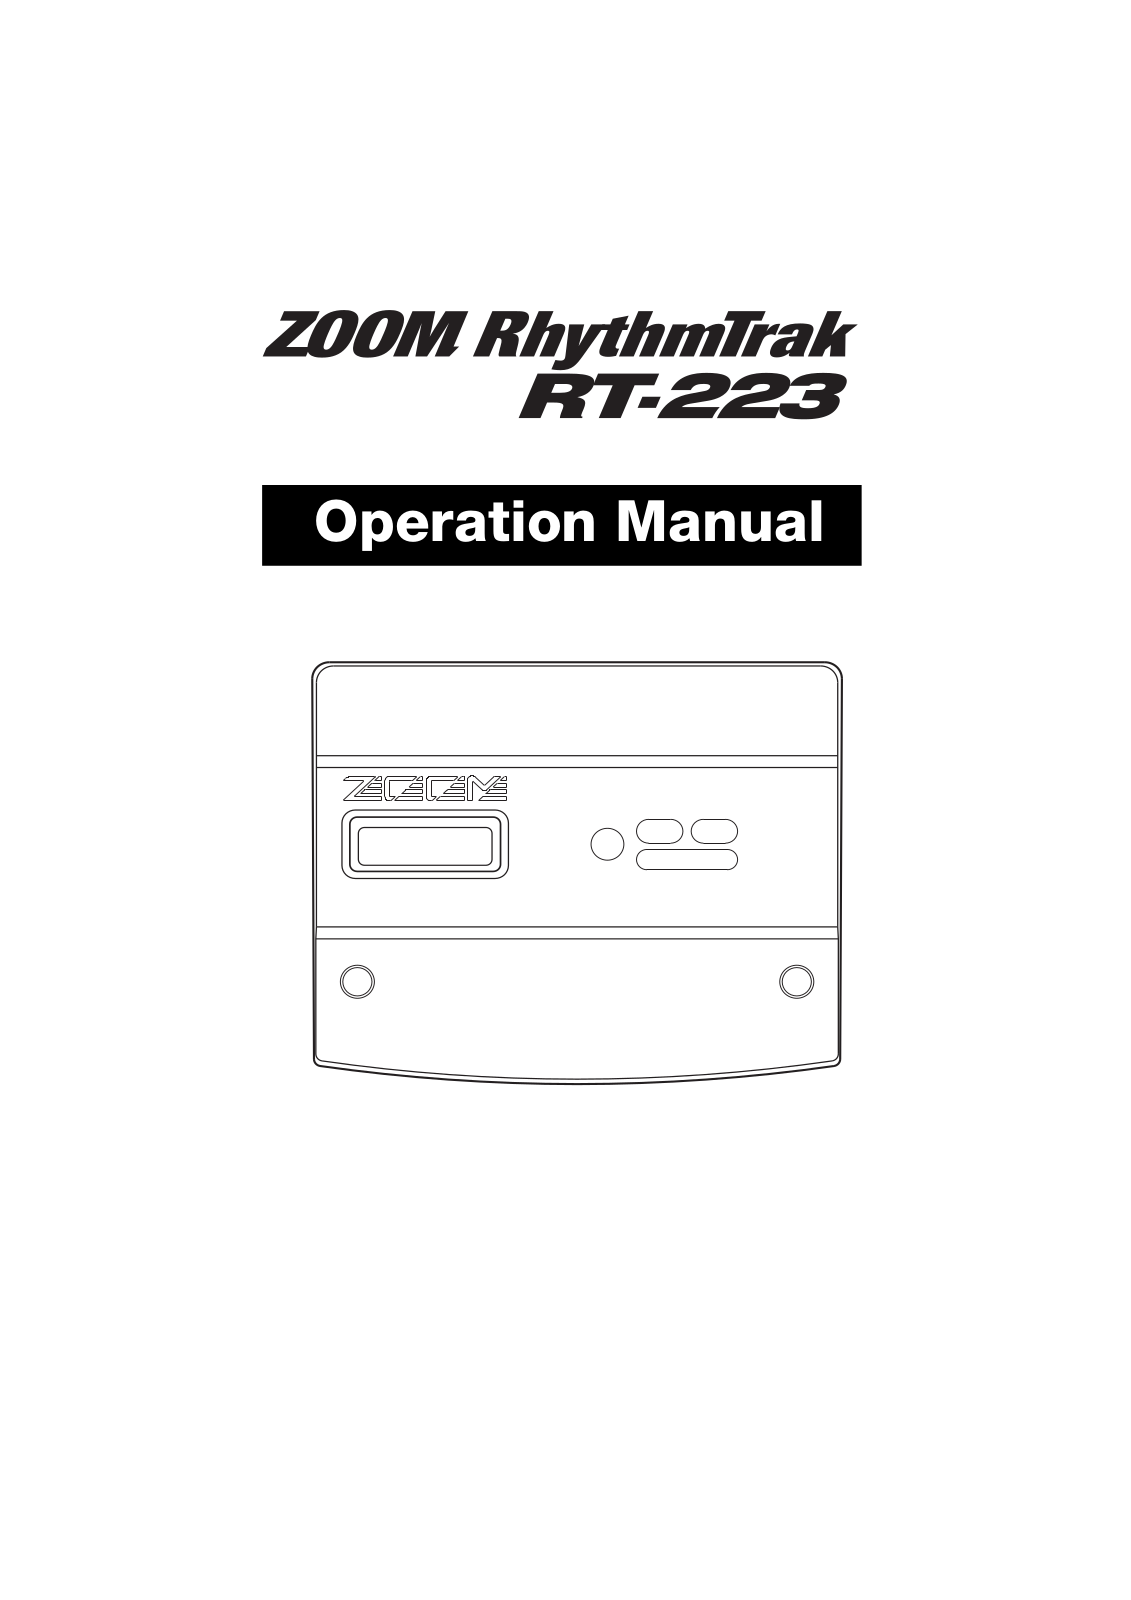 Zoom RT-223 User Manual